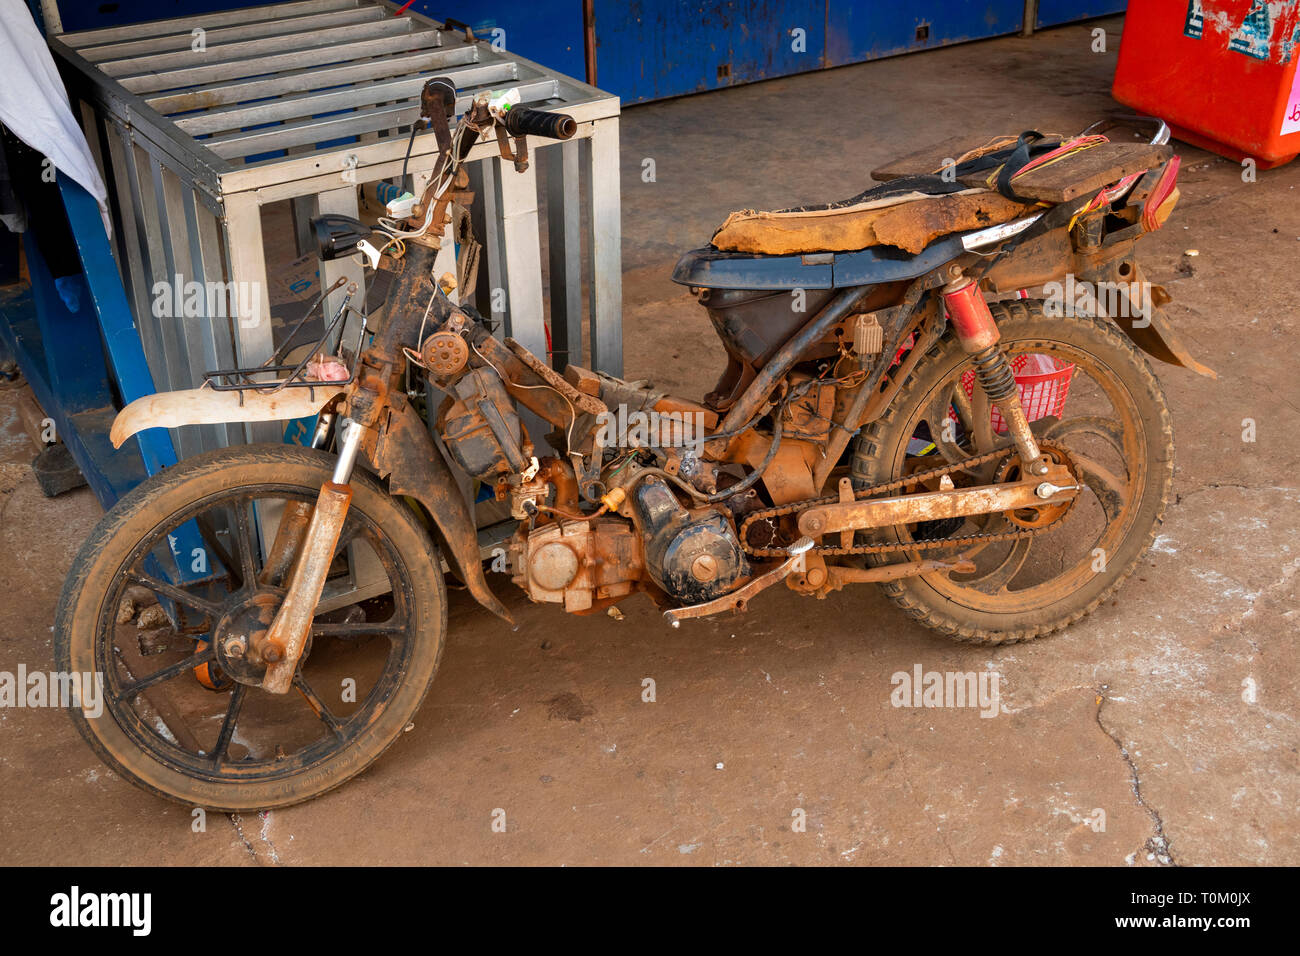 Cambodia, Mondulkiri Province, Sen Monorom, old motorbike in terrible rusty condition Stock Photo